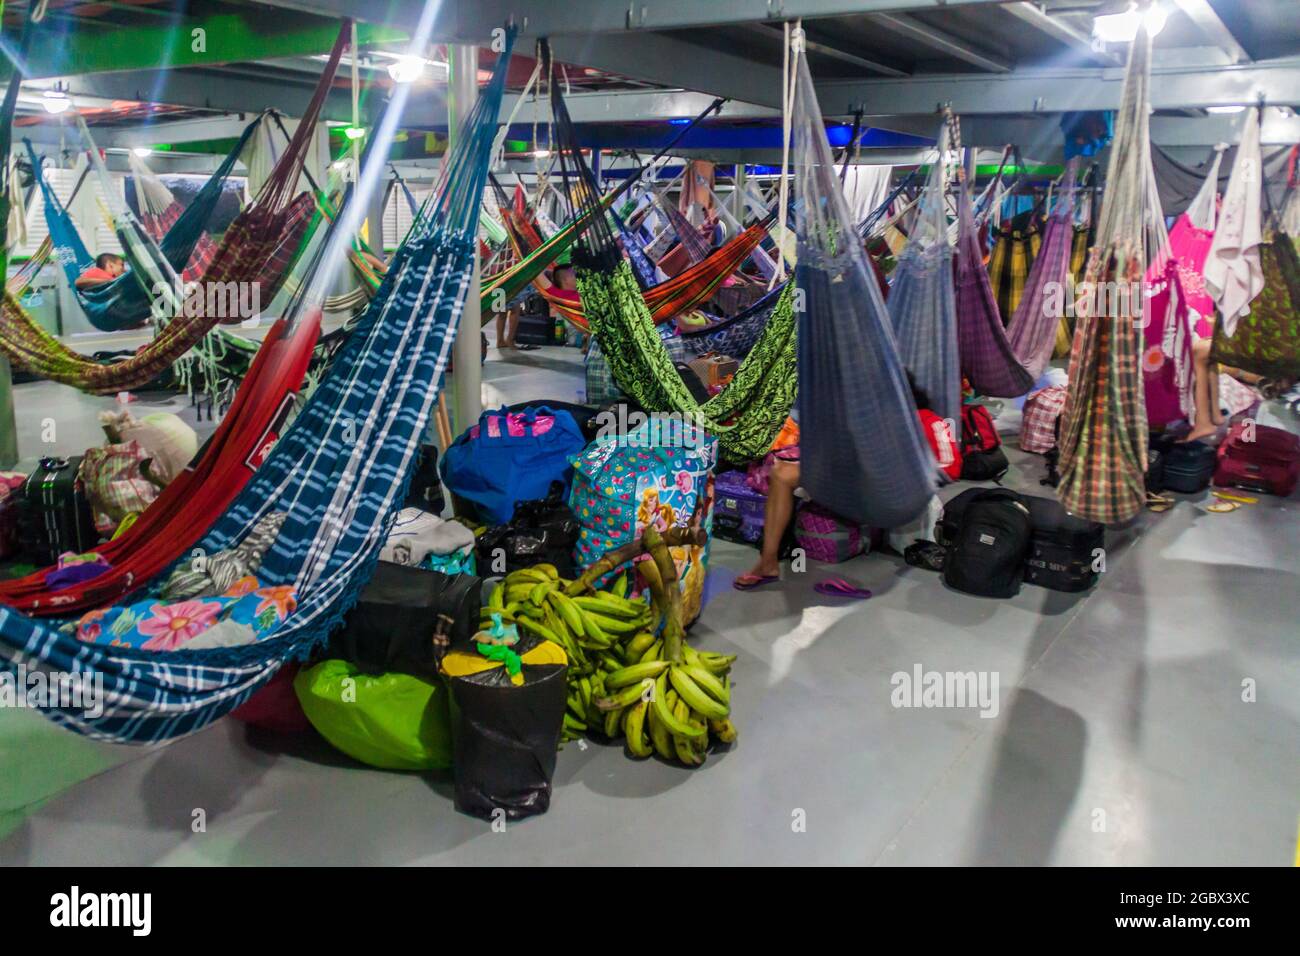 AMAZON, BRAZIL - JUNE 22, 2015: Passengers of hammock deck at the boat Diamante which plies river Amazon between Tabatinga and Manaus, Brazil. Stock Photo